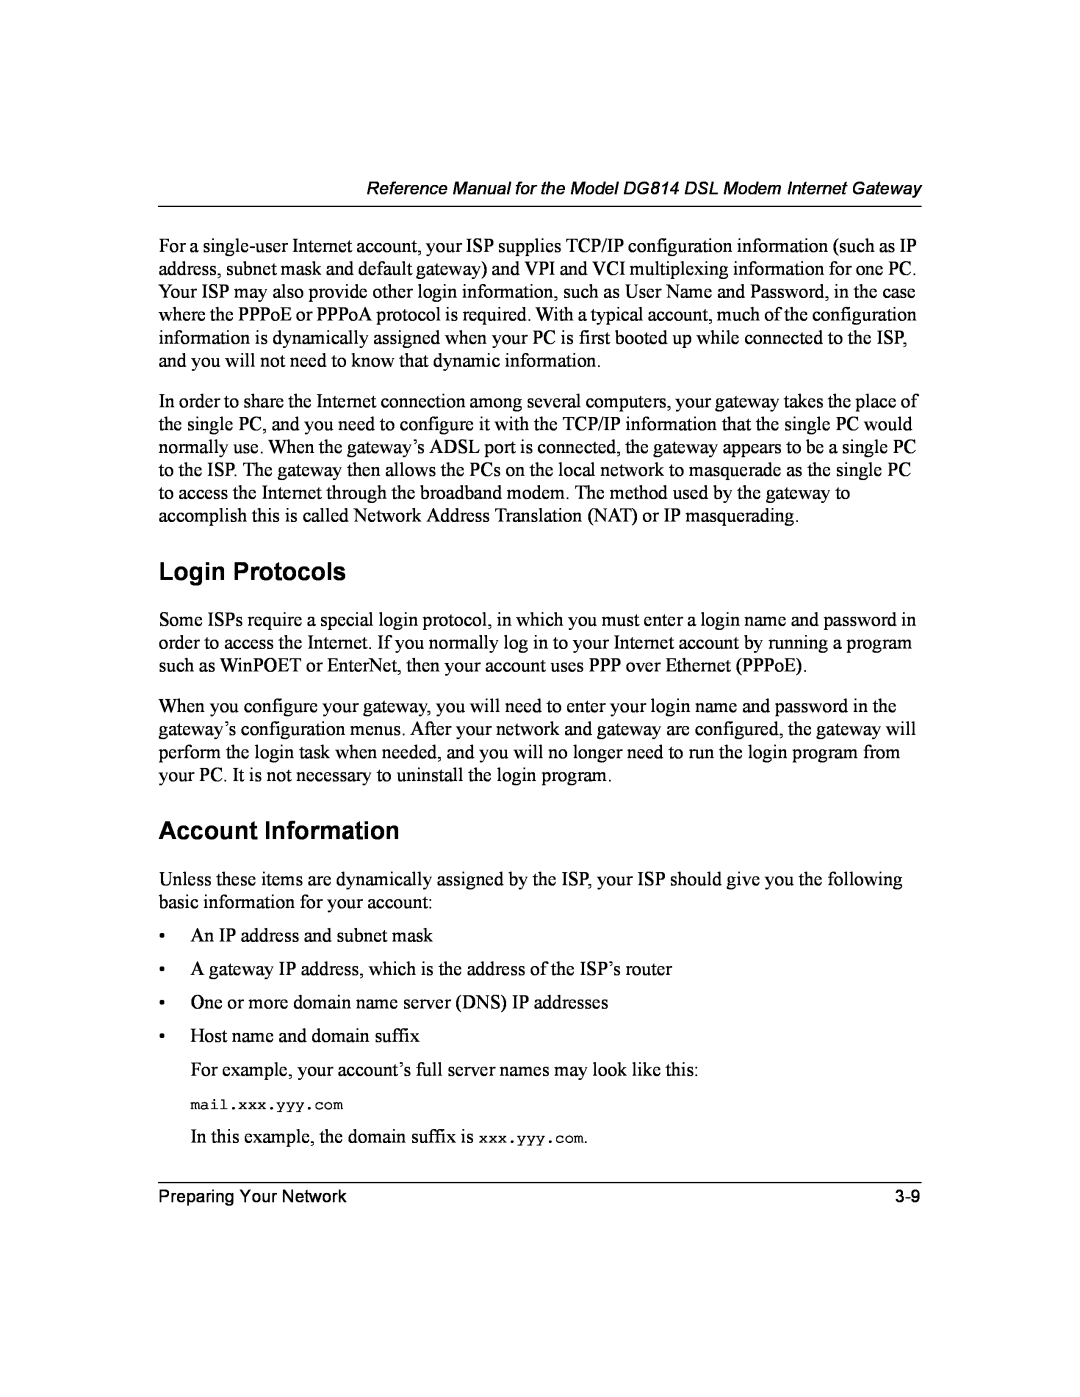 NETGEAR DG814 DSL manual Login Protocols, Account Information 